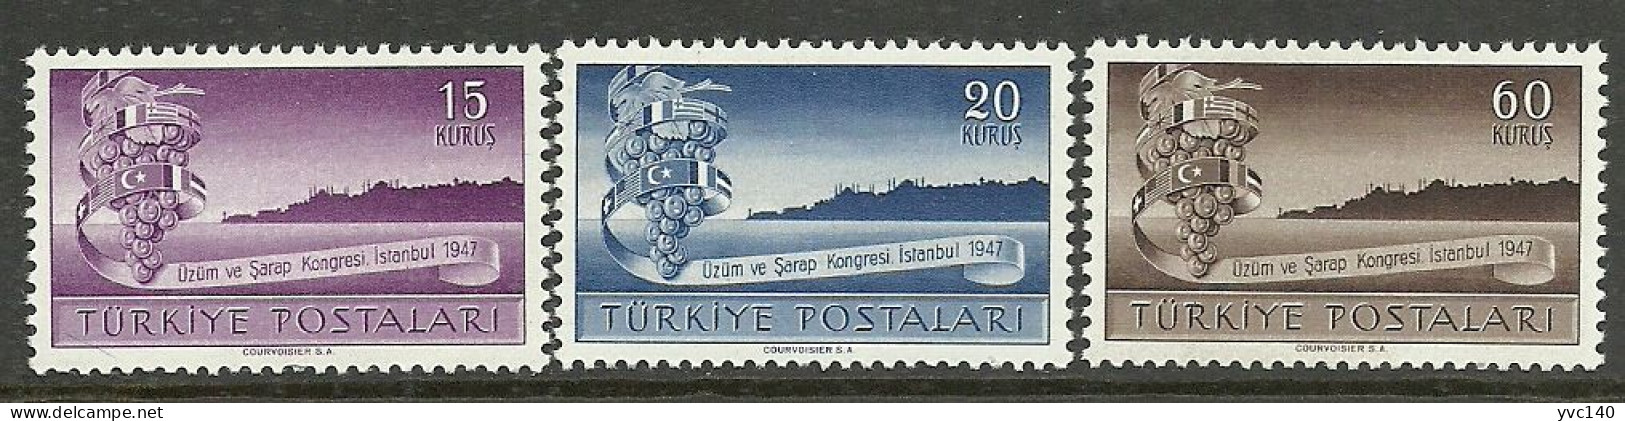 Turkey; 1947 3rd International Vintners' Congress (Complete Set) MNH** - Unused Stamps